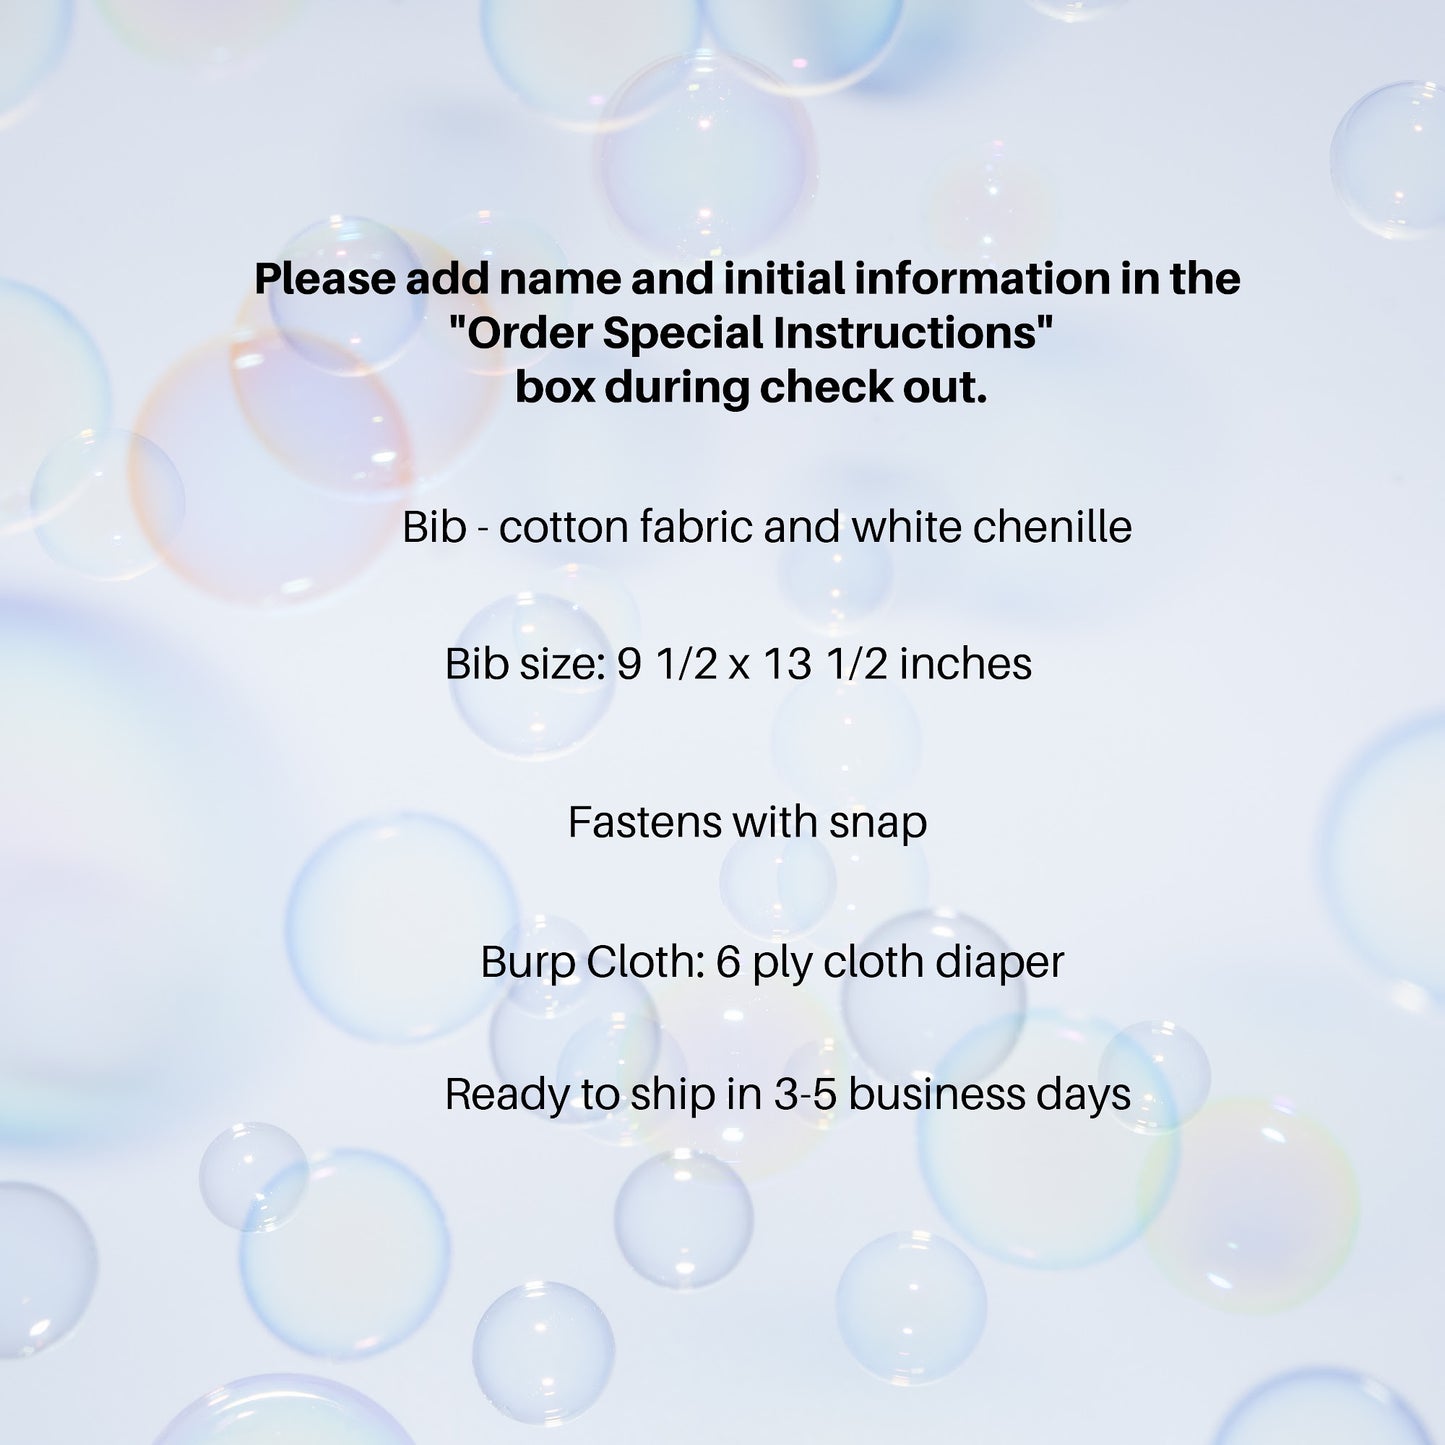 Custom Soccer Theme Baby Bib and Burp Cloth Set - Personalized Baby Shower Gift